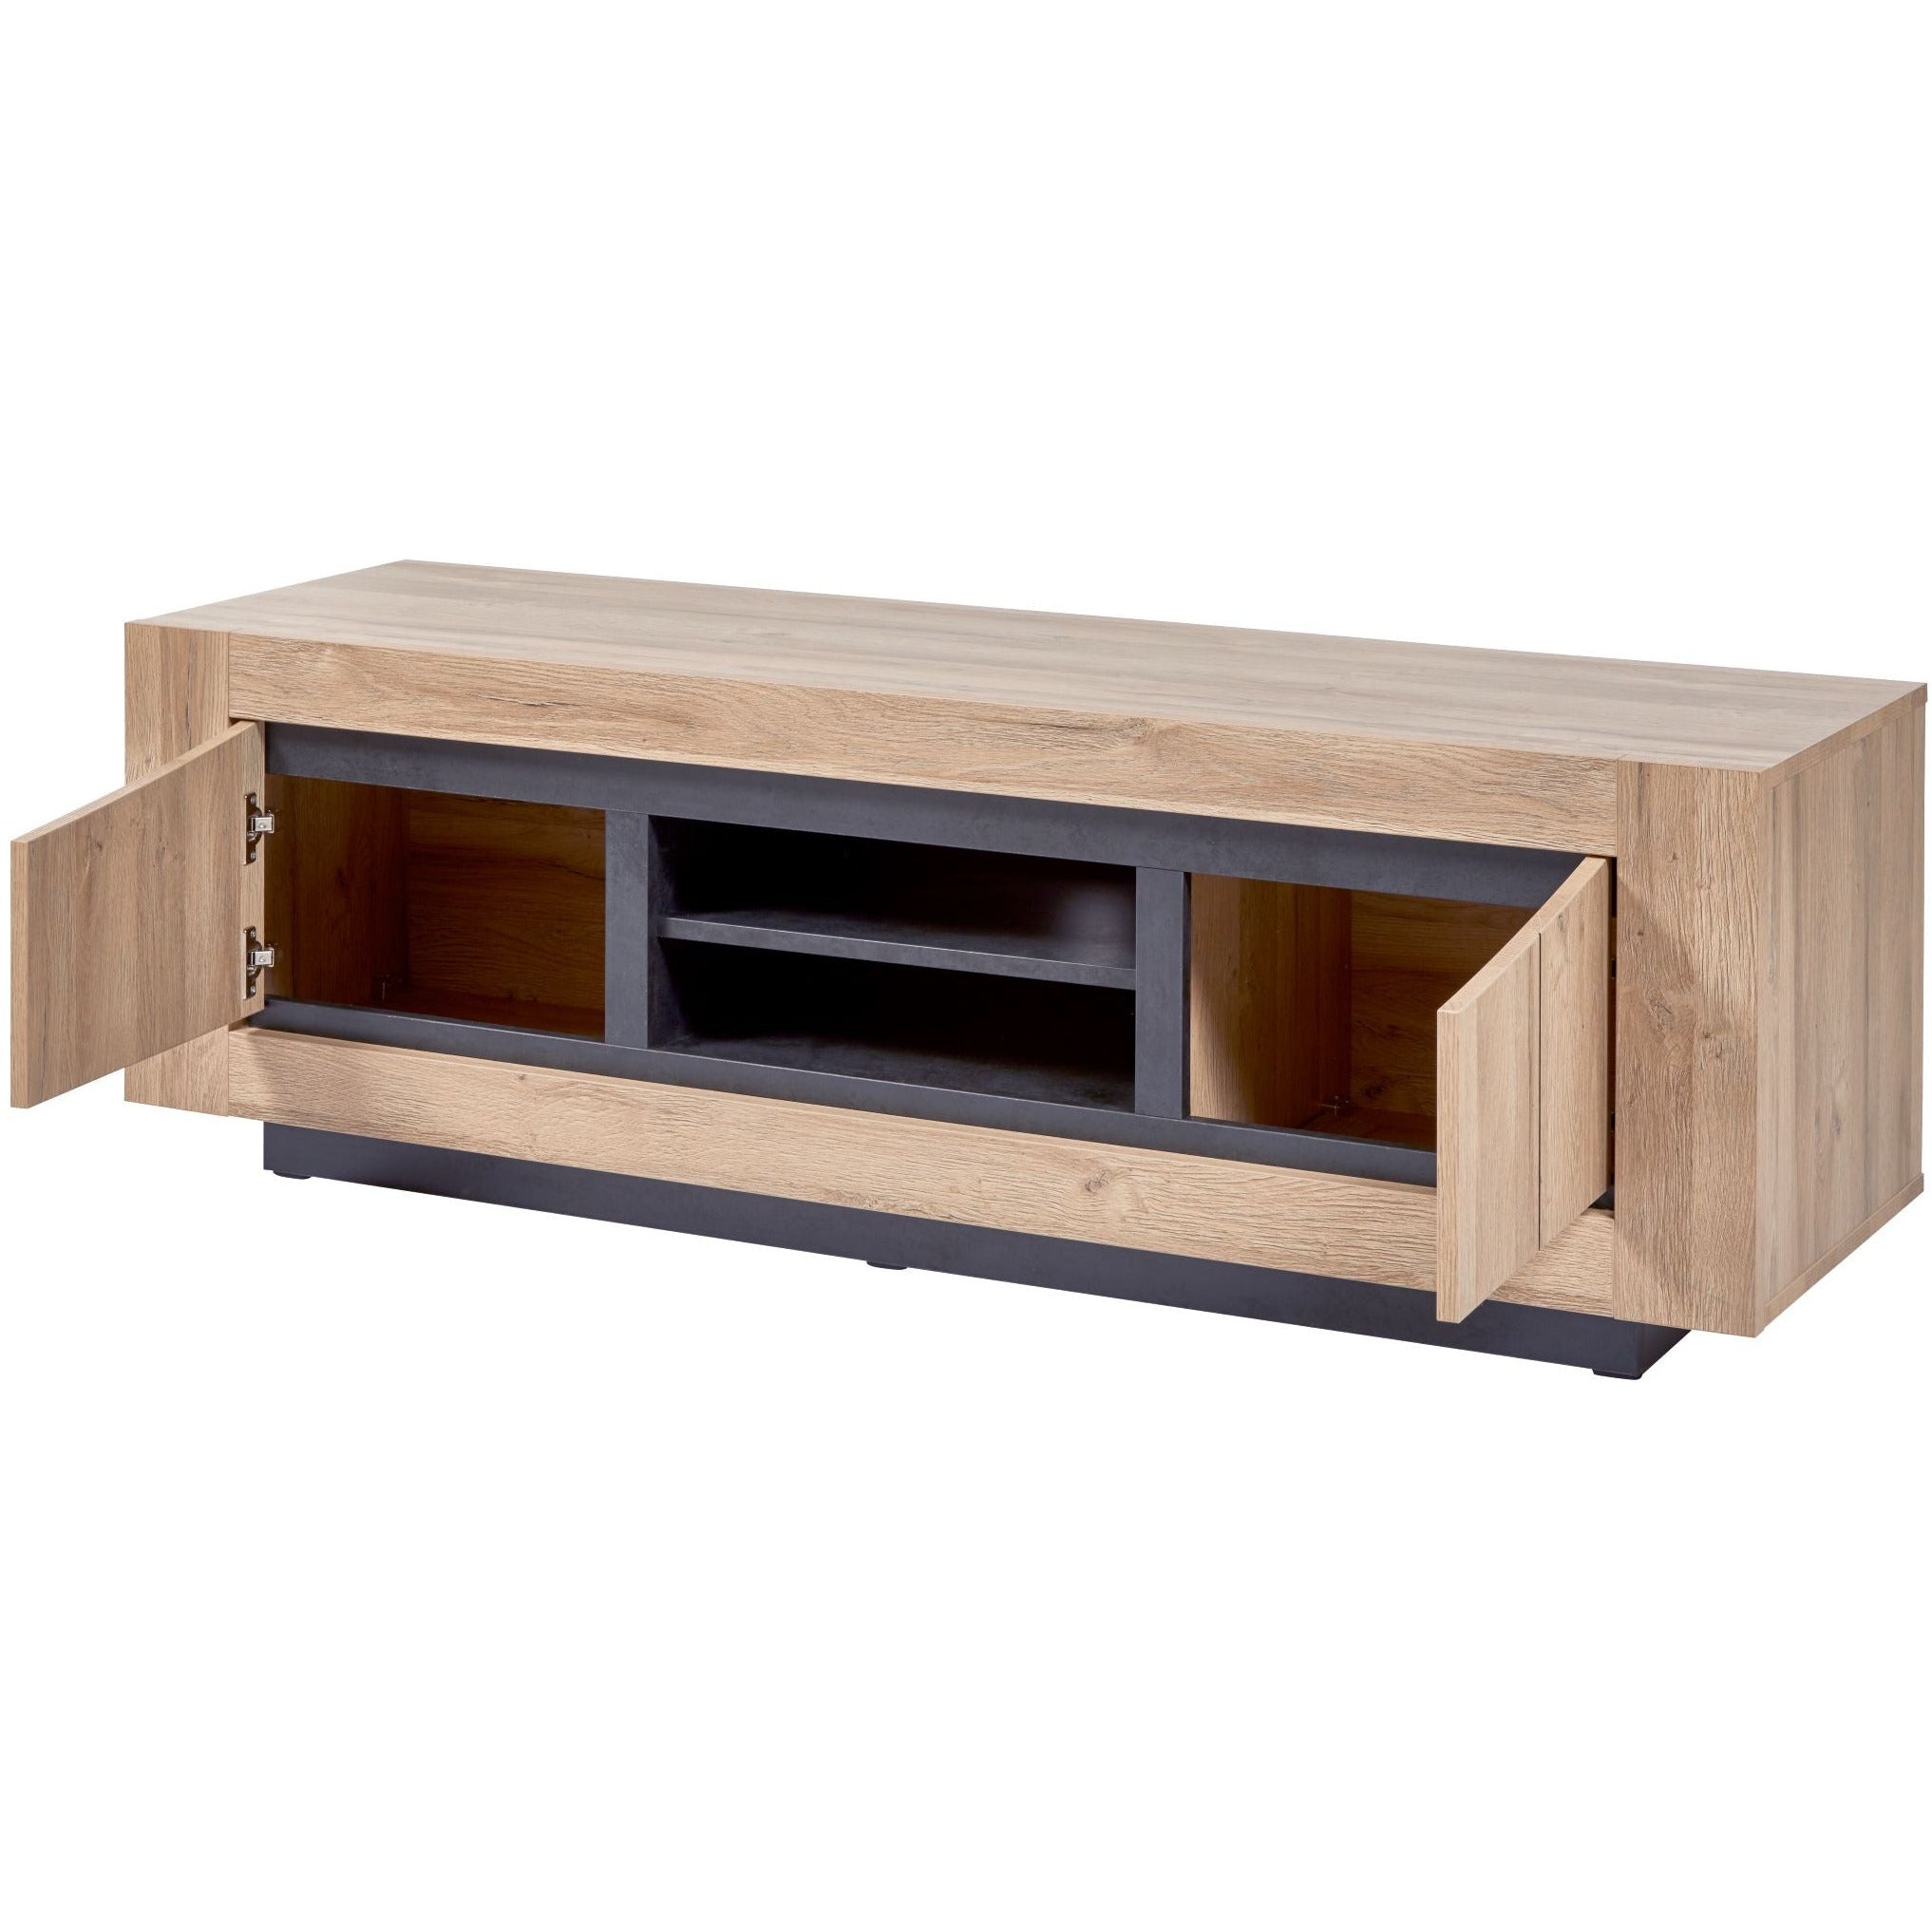 TV cabinet | Furniture series Fugue | Natural, gray, brown | 160x